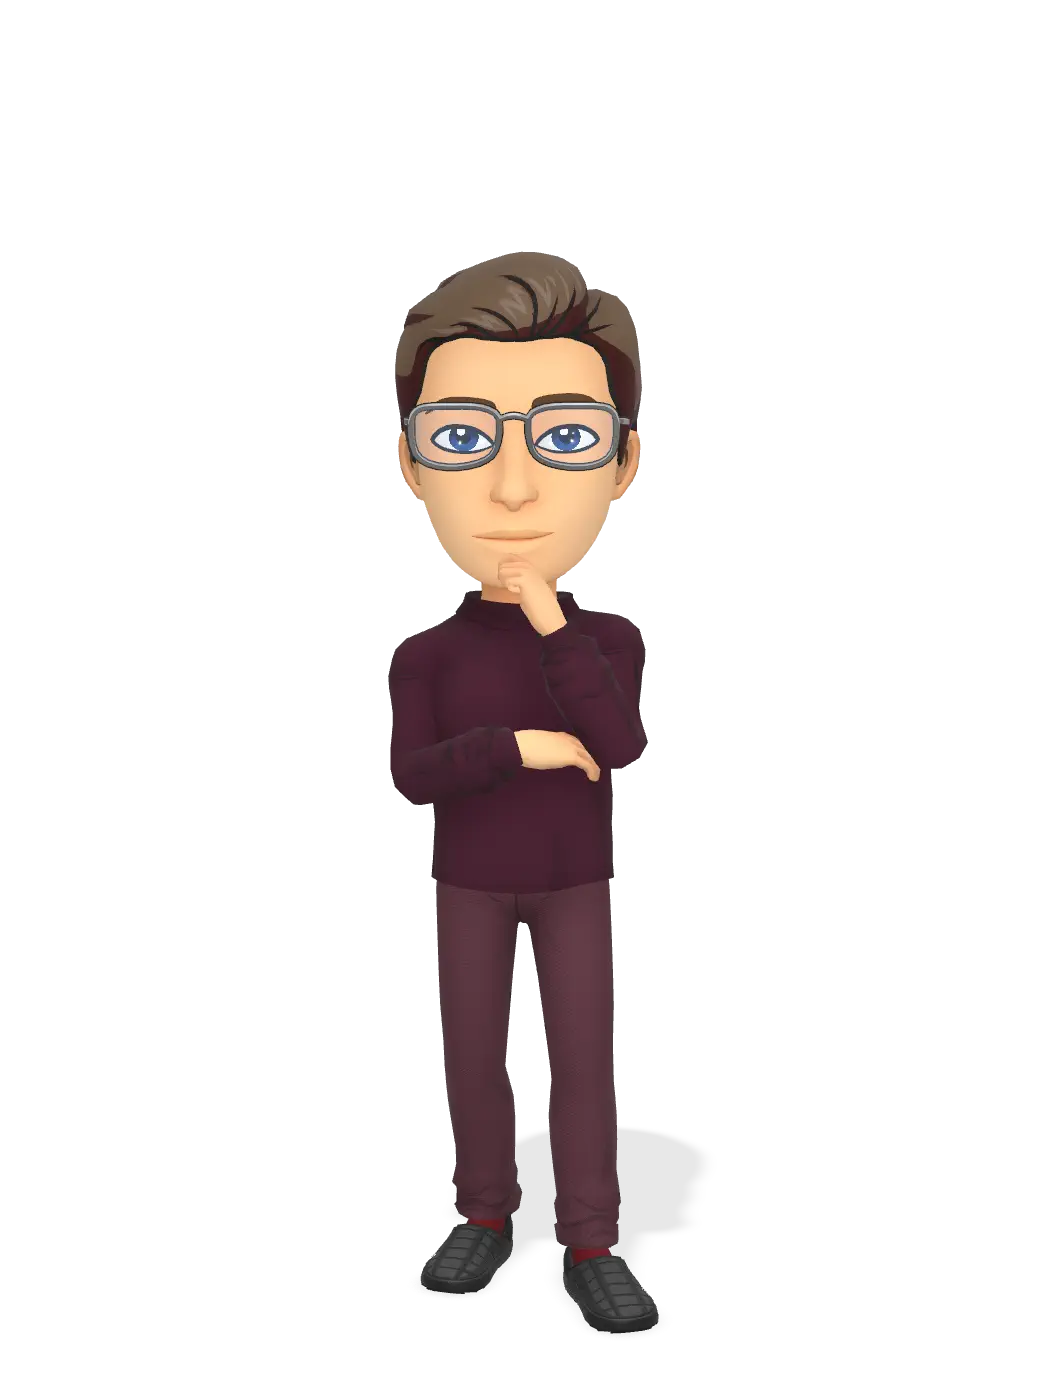 3D Bitmoji for marcbiskup avatar